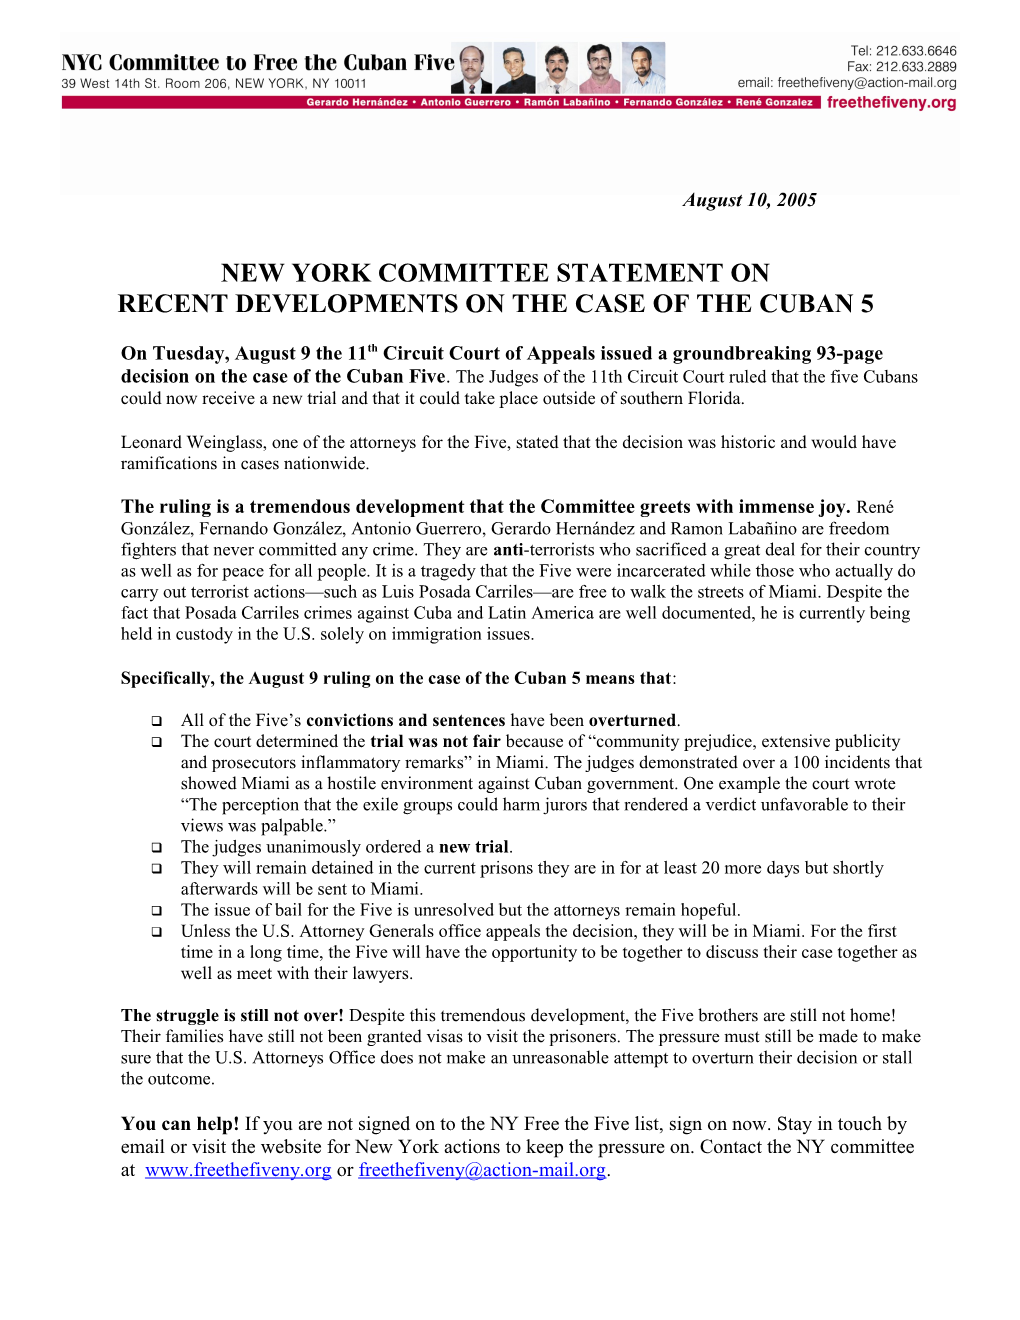 New York Committee Statement On